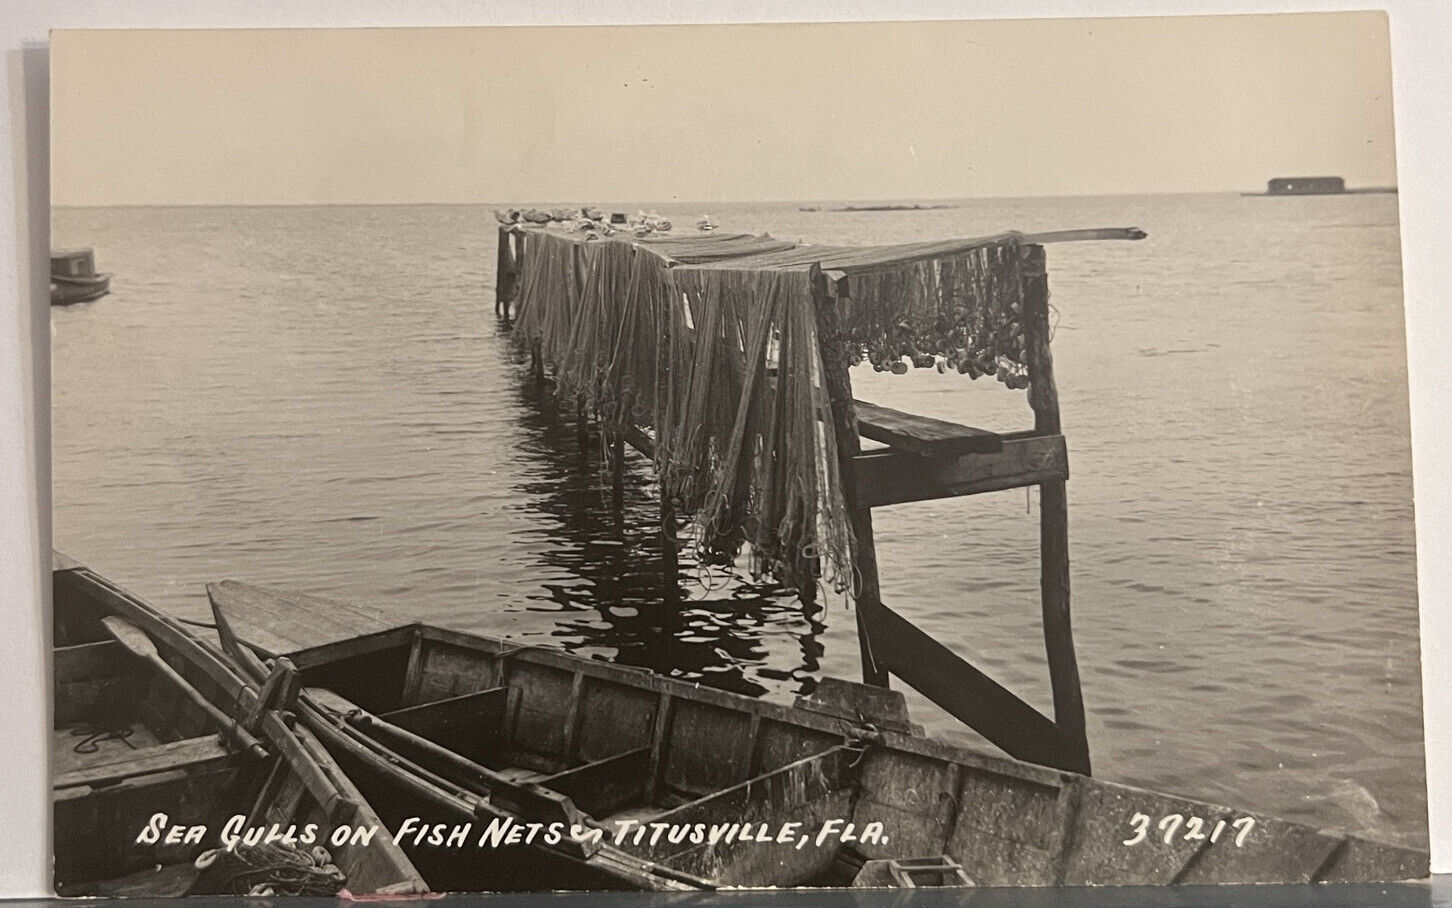 Vintage Postcard Seagulls On Fish Nets In Florida Real Photo Ephemera